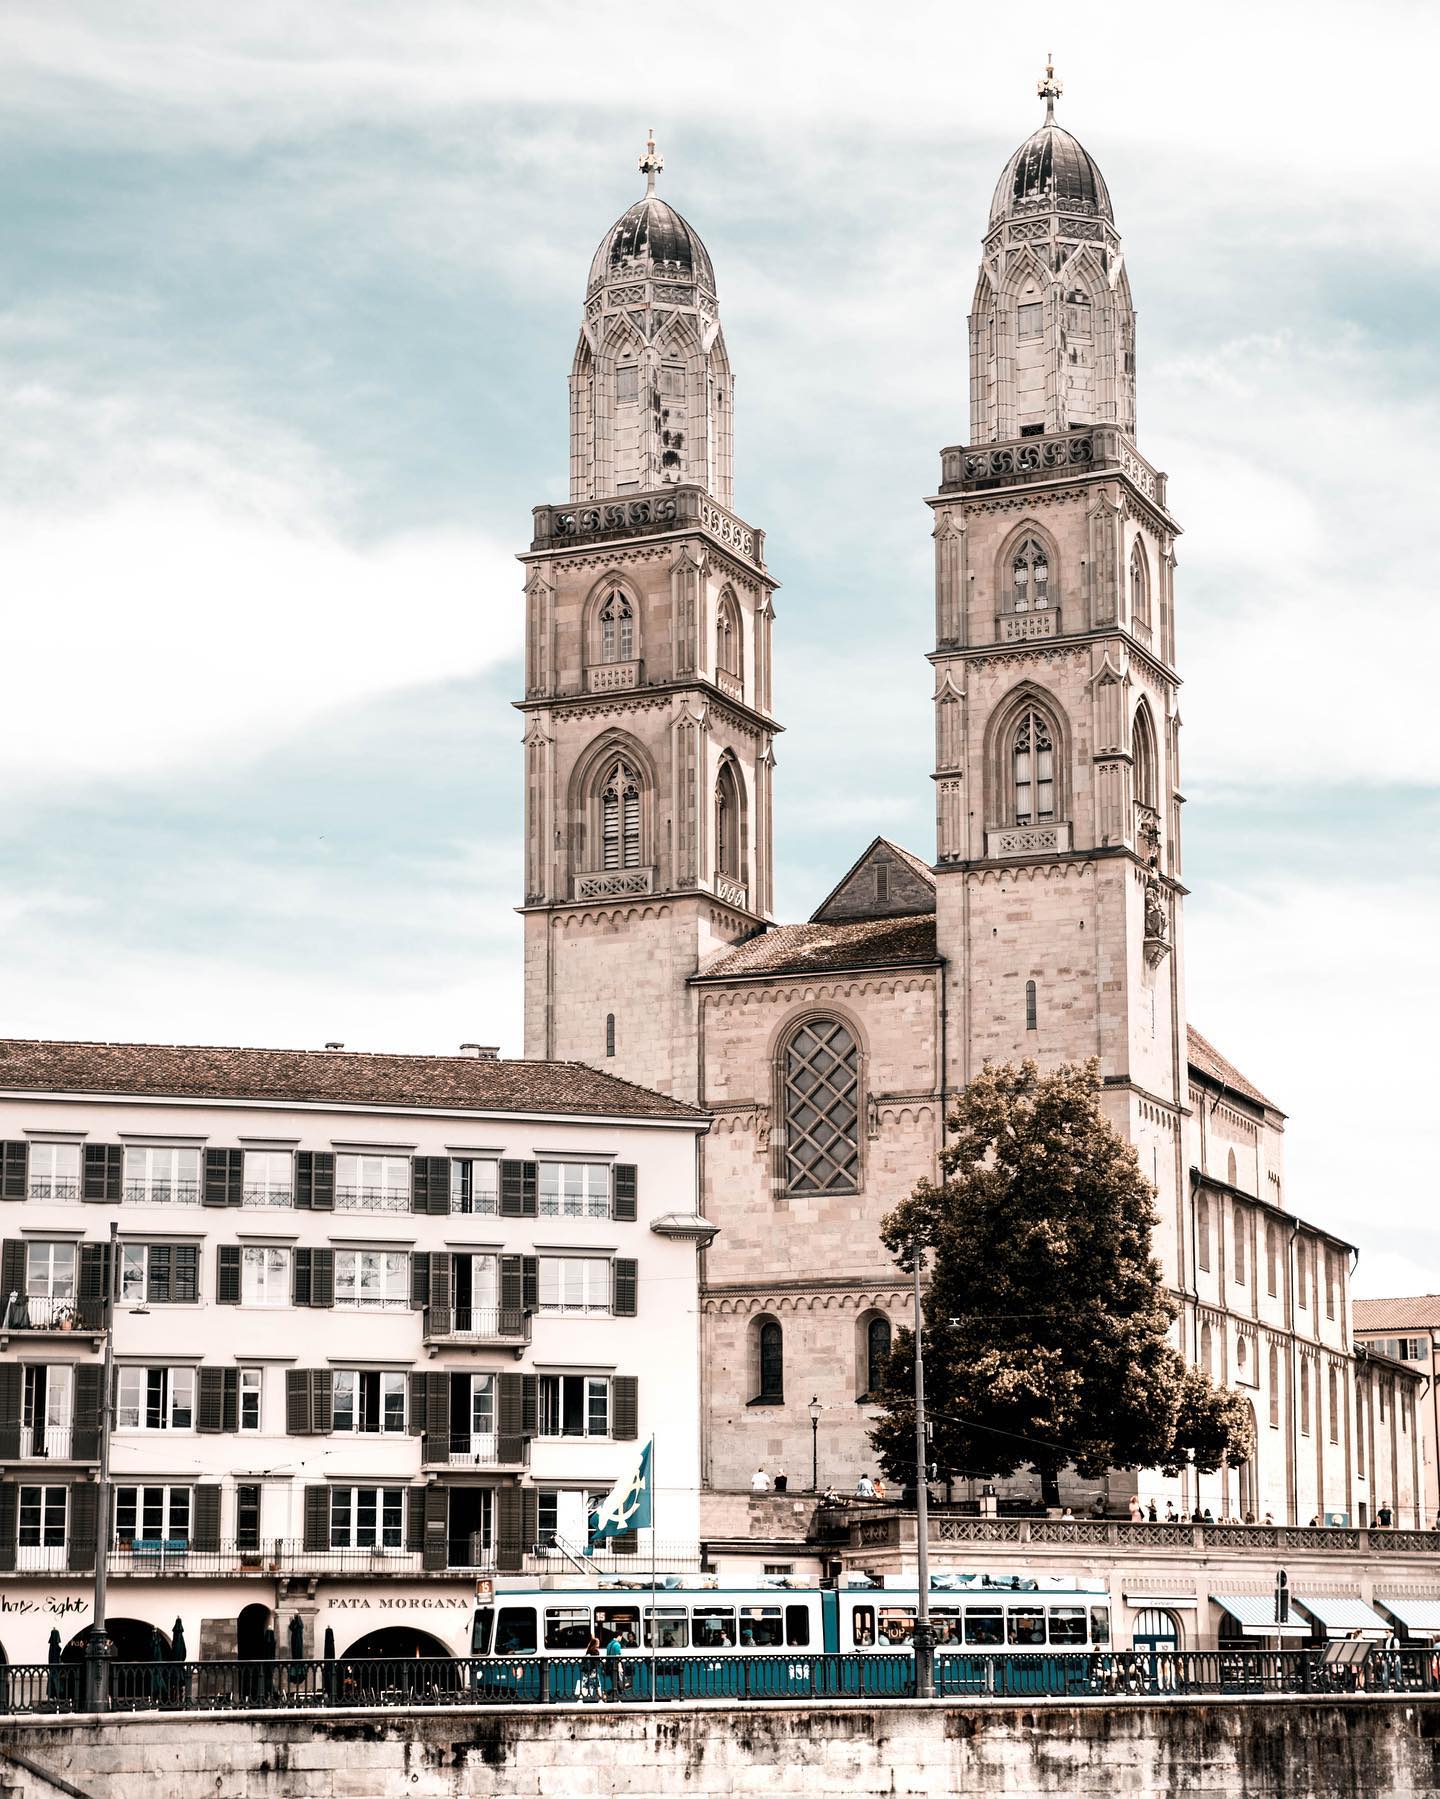 📍 Location/Emplacement: Zürich, Switzerland  📷 Camera/Appareil: Canon EOS 6D Mark II, Canon EF24-70mm f/2.8 II USM
.
.
.
.
.
.
.
.
.
.
.
.
.
 #ic_architecture #icu_architecture #jj_architecture #creative_architecture #arkiromantix #tv_architectural #lookingup_architecture #unlimitedcities #arquitecturamx #excellent_structure #sky_high_architecture #architecture_greatshots #minimal_lookup #diagonal_symmetry  #inlovewithswitzerland #exploremyswitzerland #igersswitzerland #ig_switzerland #canonphotos #canoneos #canonrebel  #igersswitzerland #myswitzerland